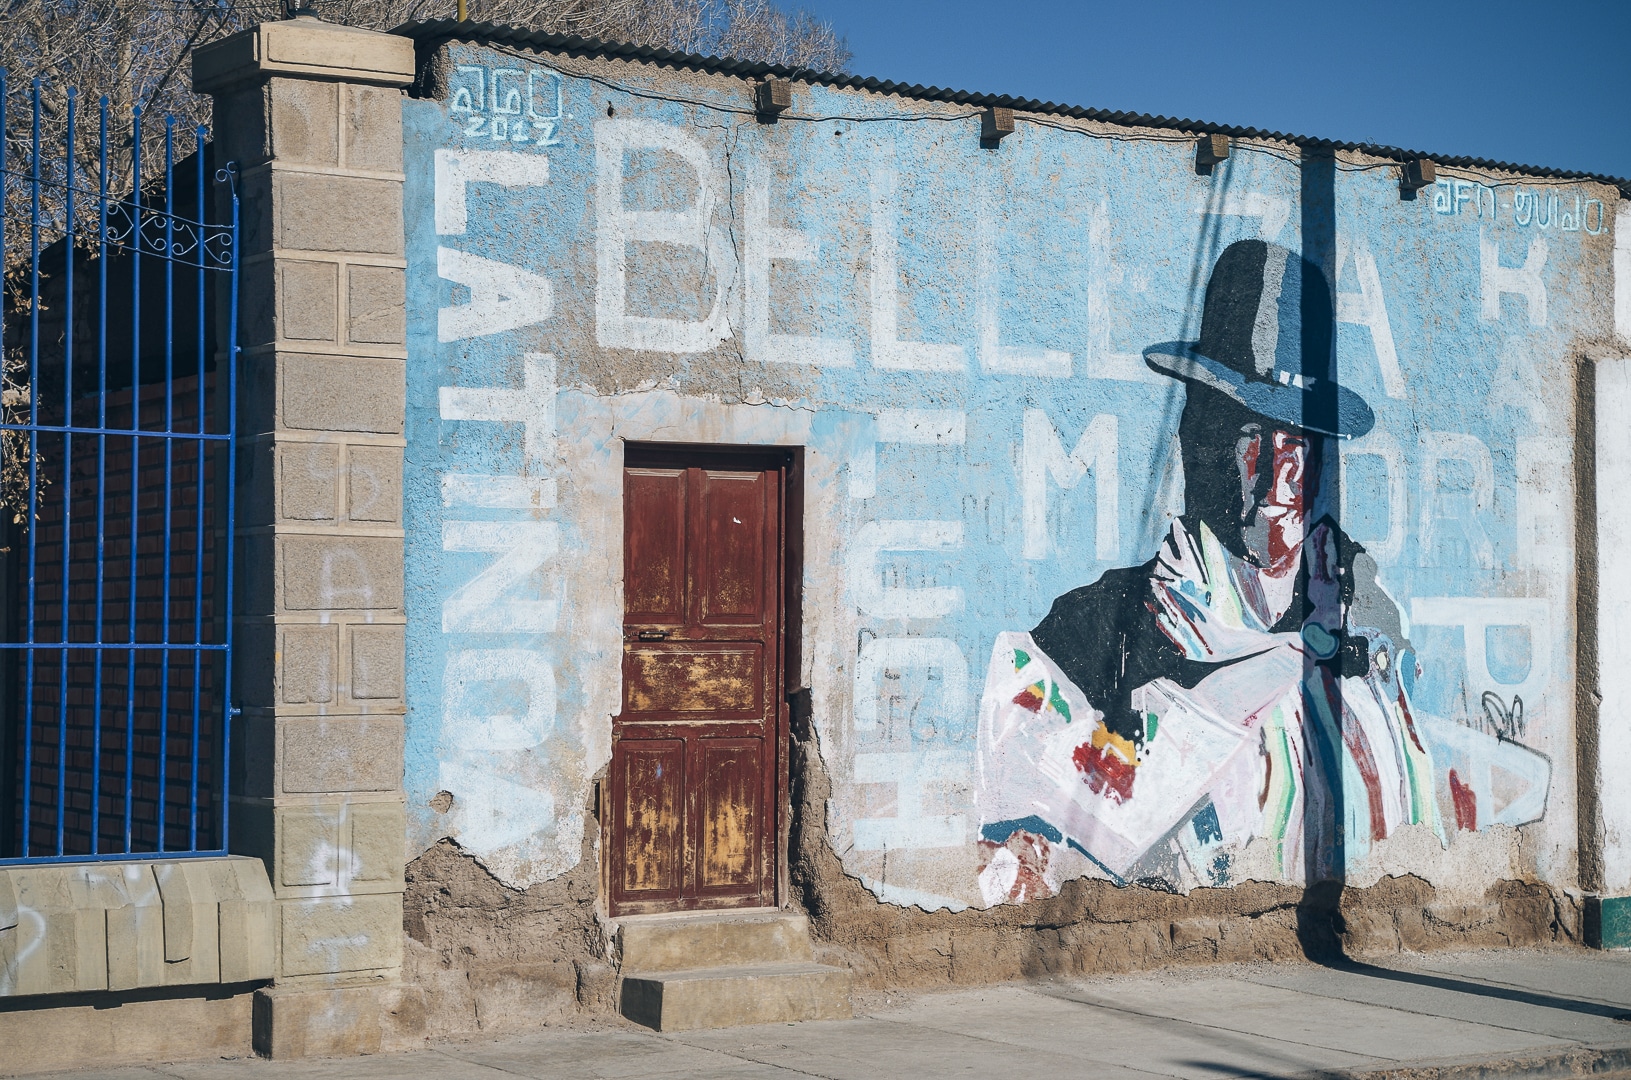 graffiti représentant une Cholita street art en Bolivie